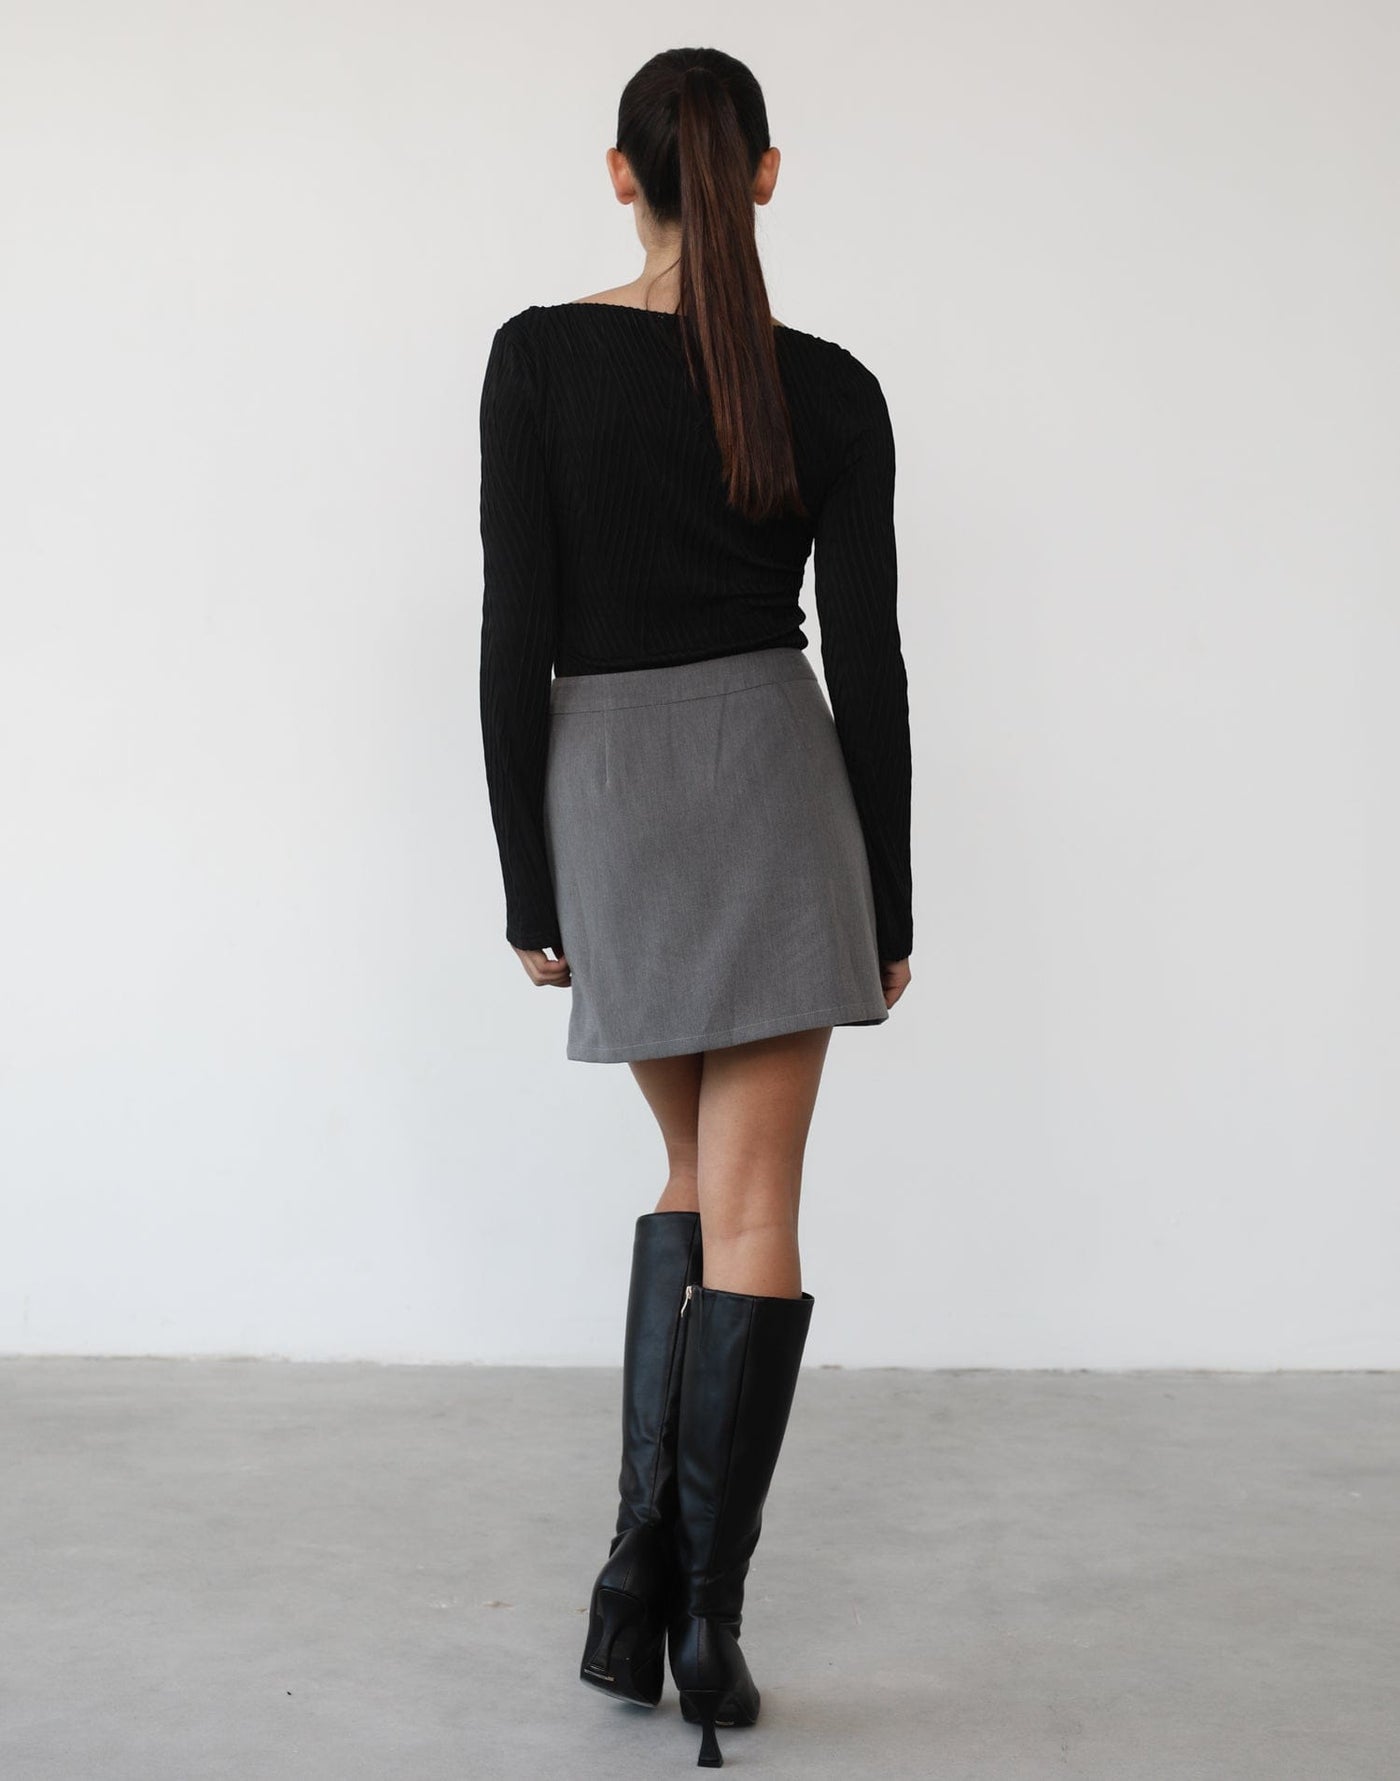 Khloe Long Sleeve Bodysuit (Black) - Black Long Sleeve Bodysuit - Women's Top - Charcoal Clothing